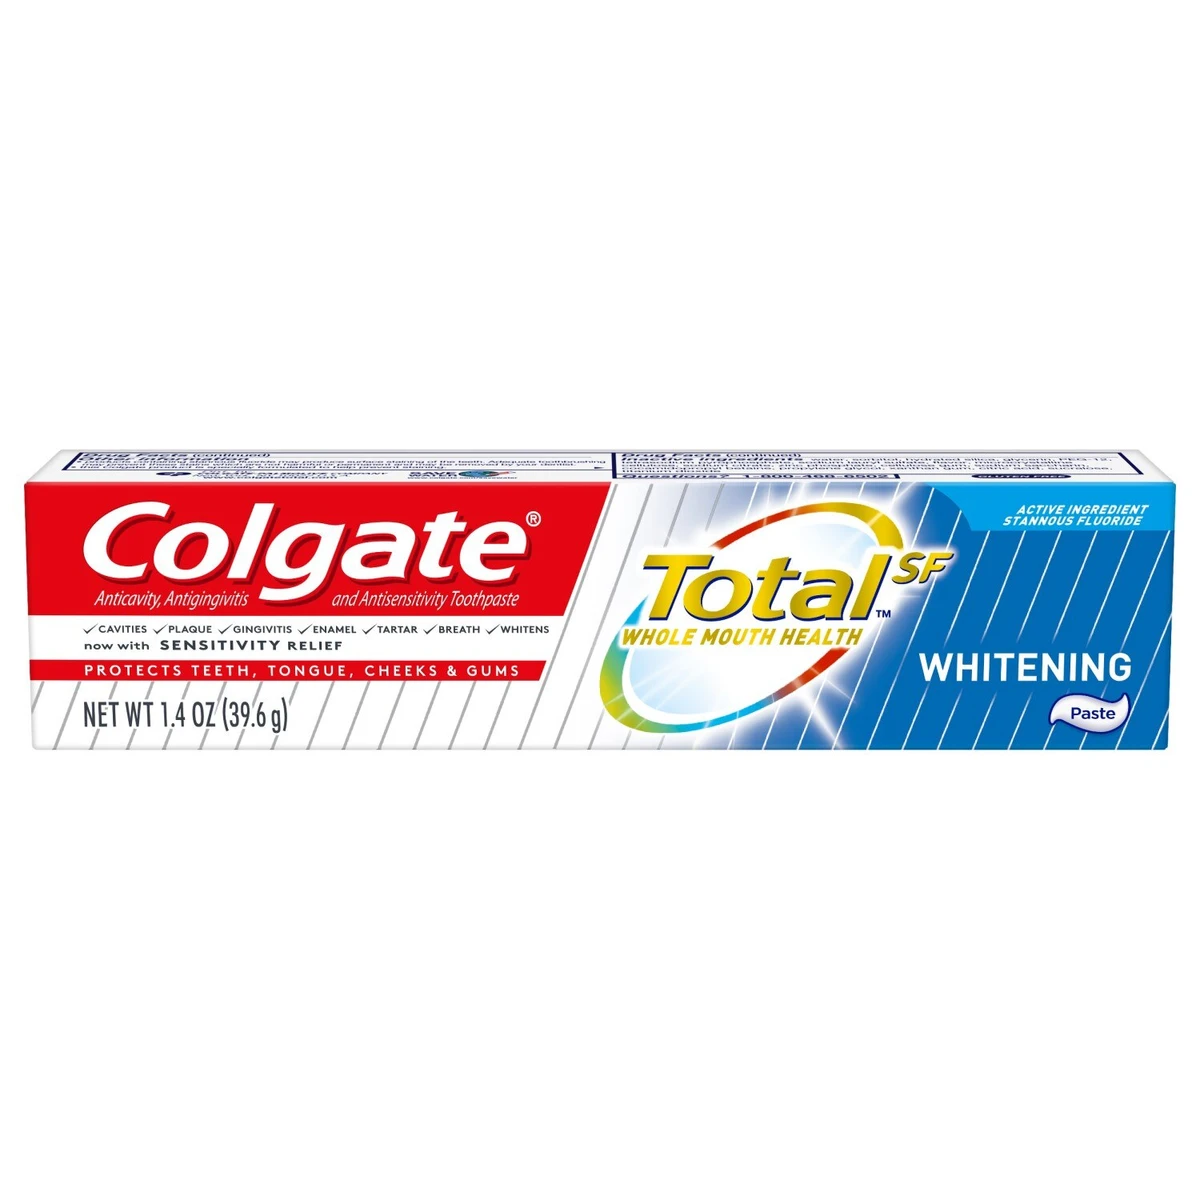 Colgate Total Travel Size Whitening Toothpaste 1.4oz